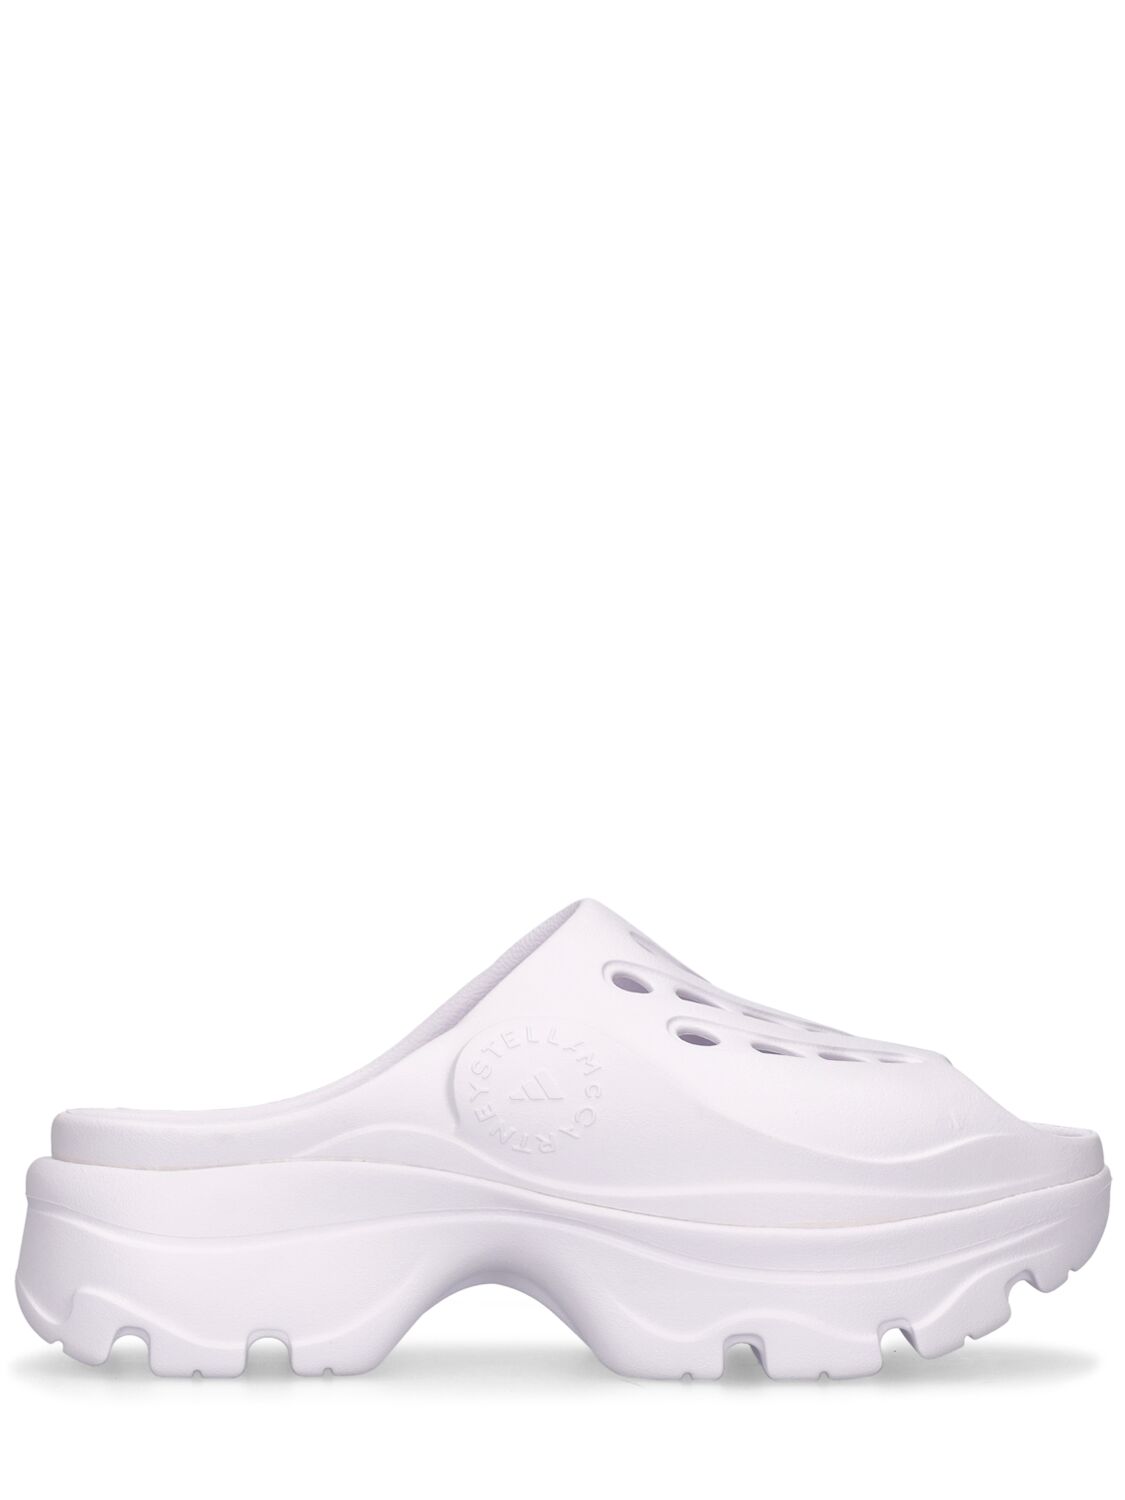 Adidas By Stella Mccartney Clog Sandals In White